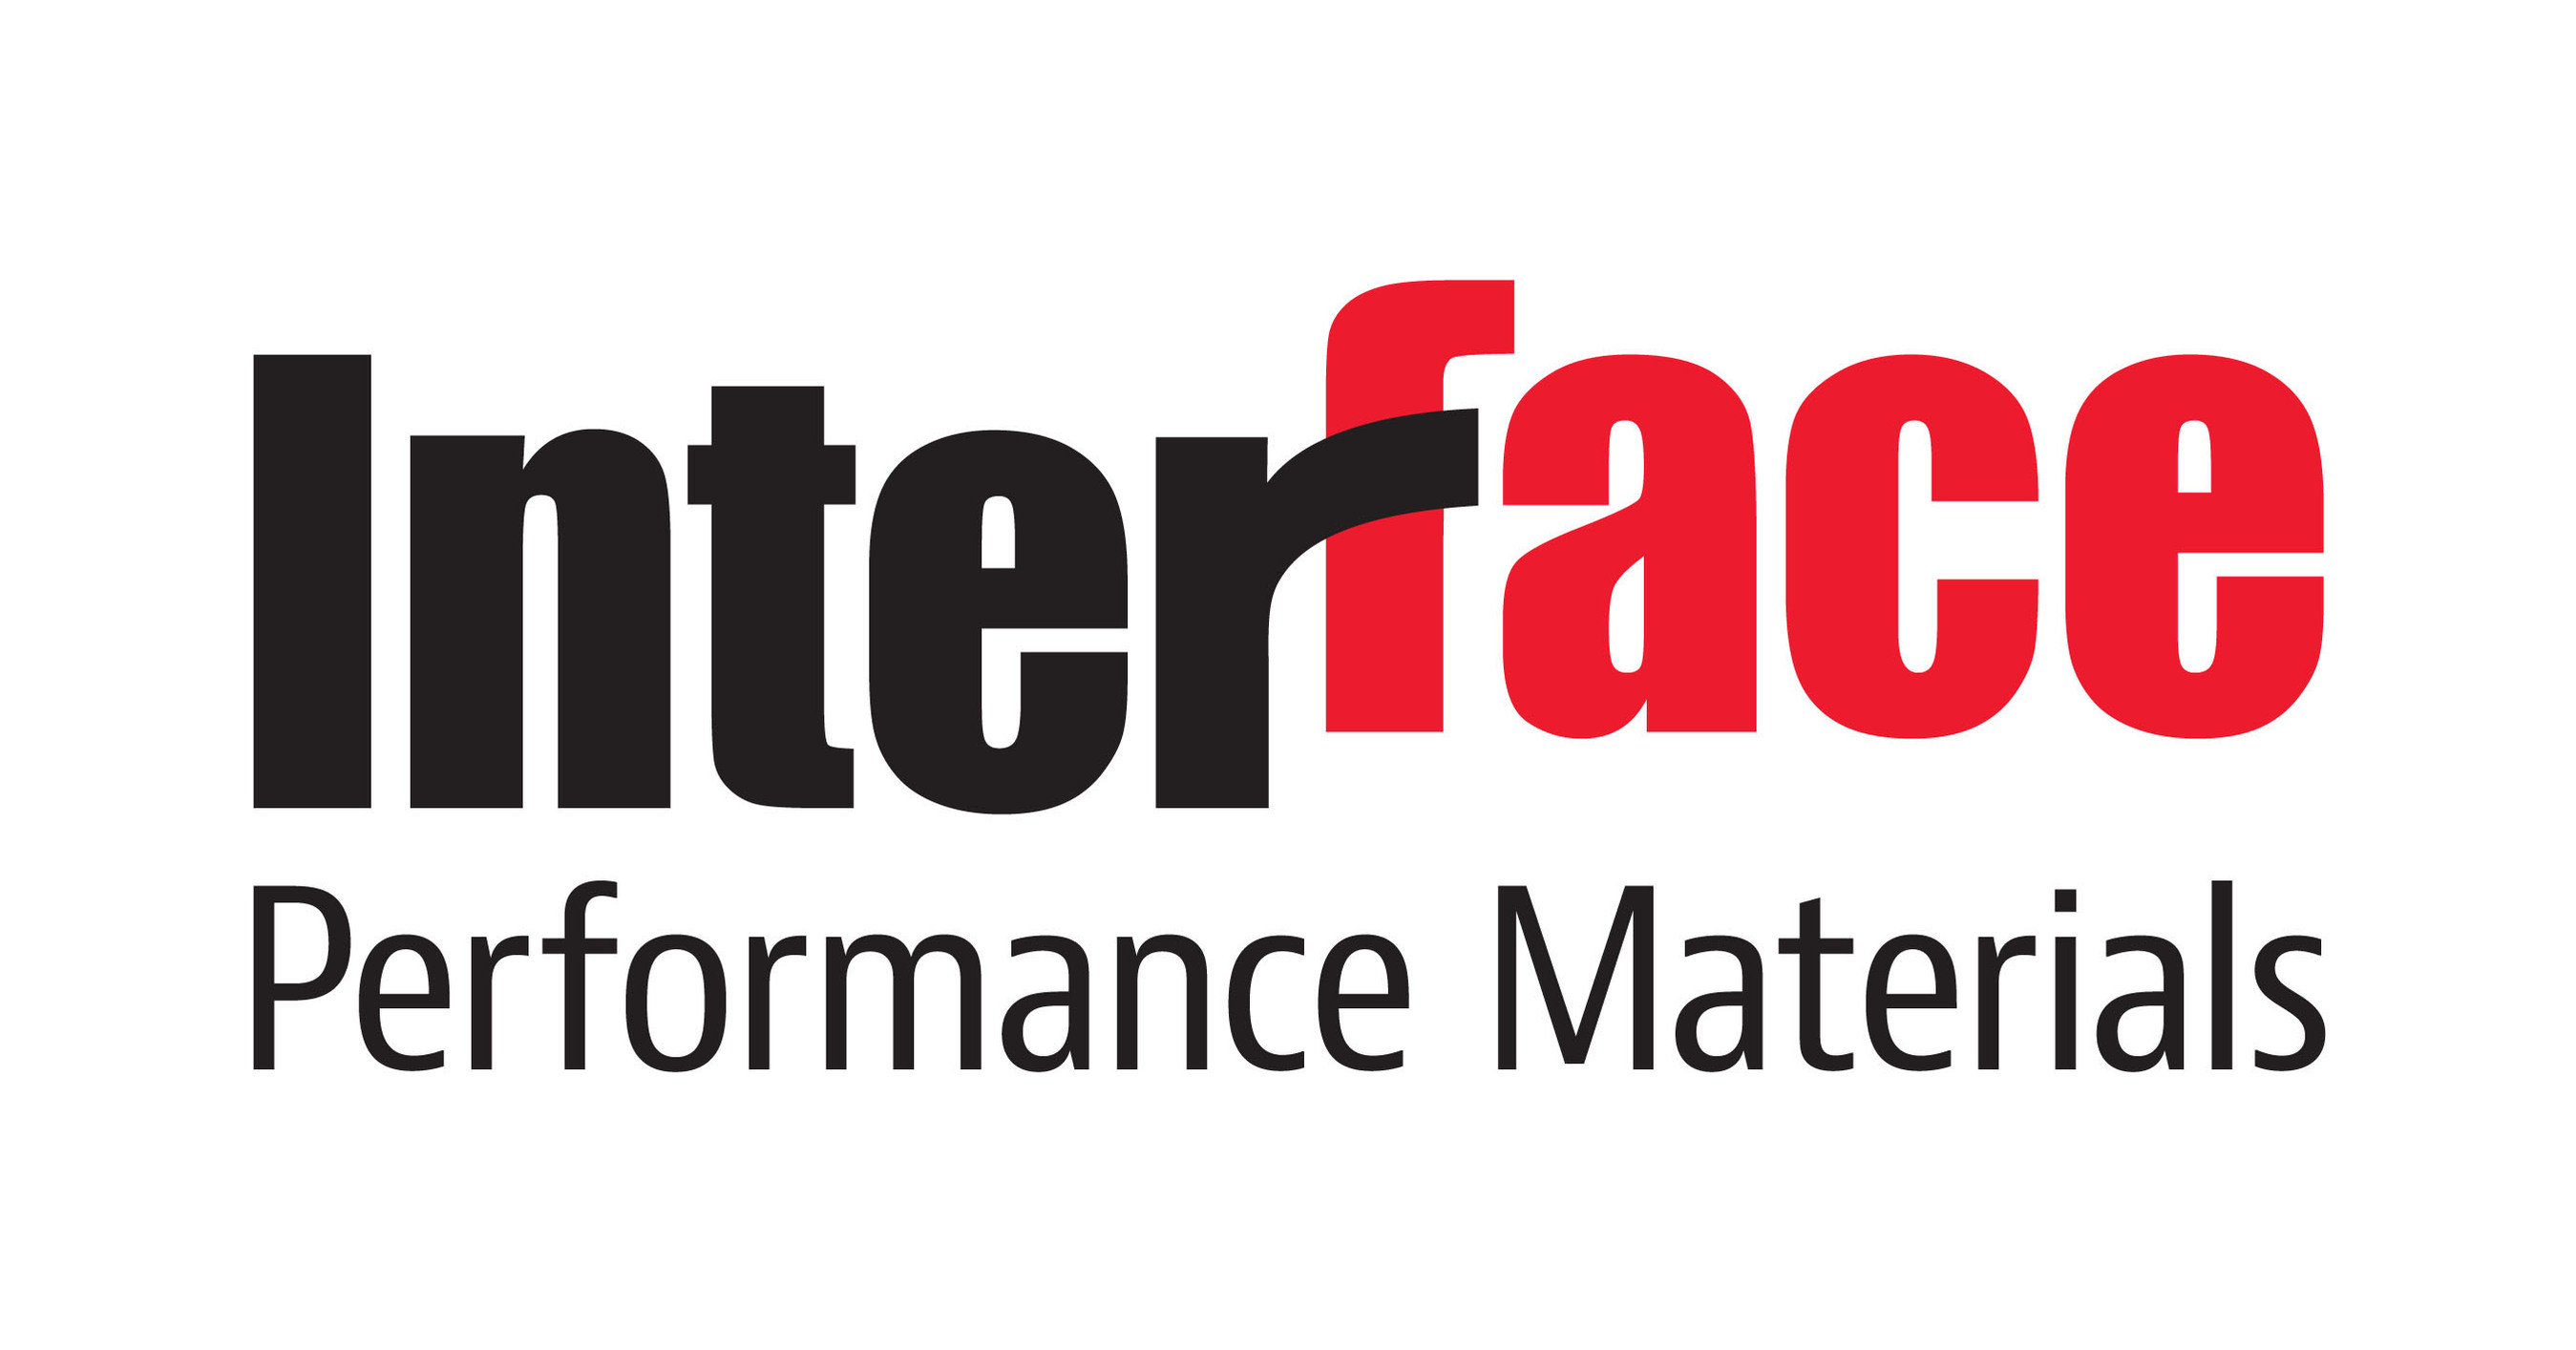 Performance interface. Interface Performance materials. Applied materials лого. Momentive Performance materials. Lotte Advanced materials logo.